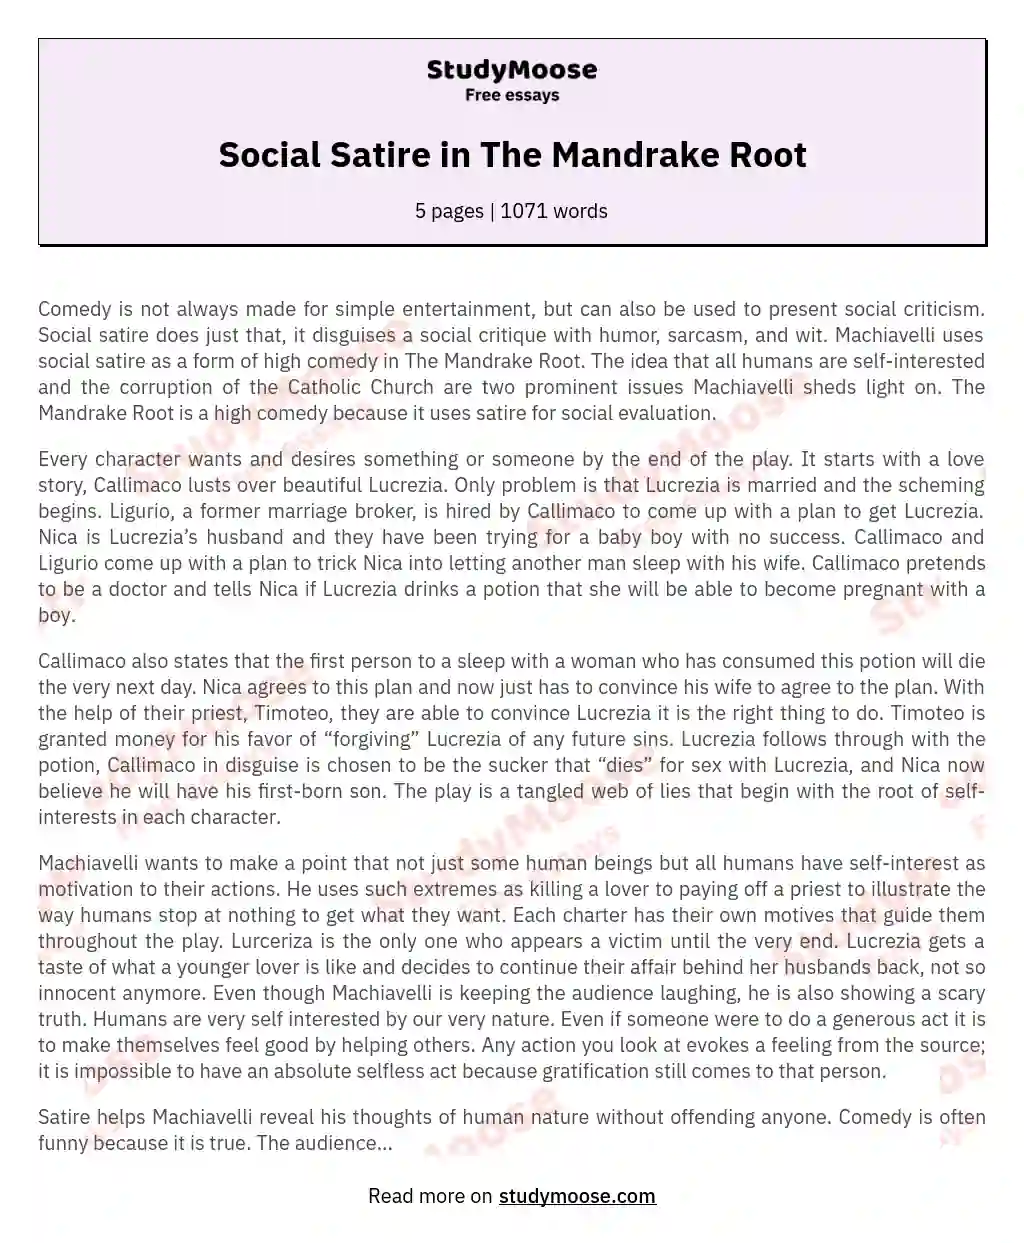 Social Satire in The Mandrake Root essay